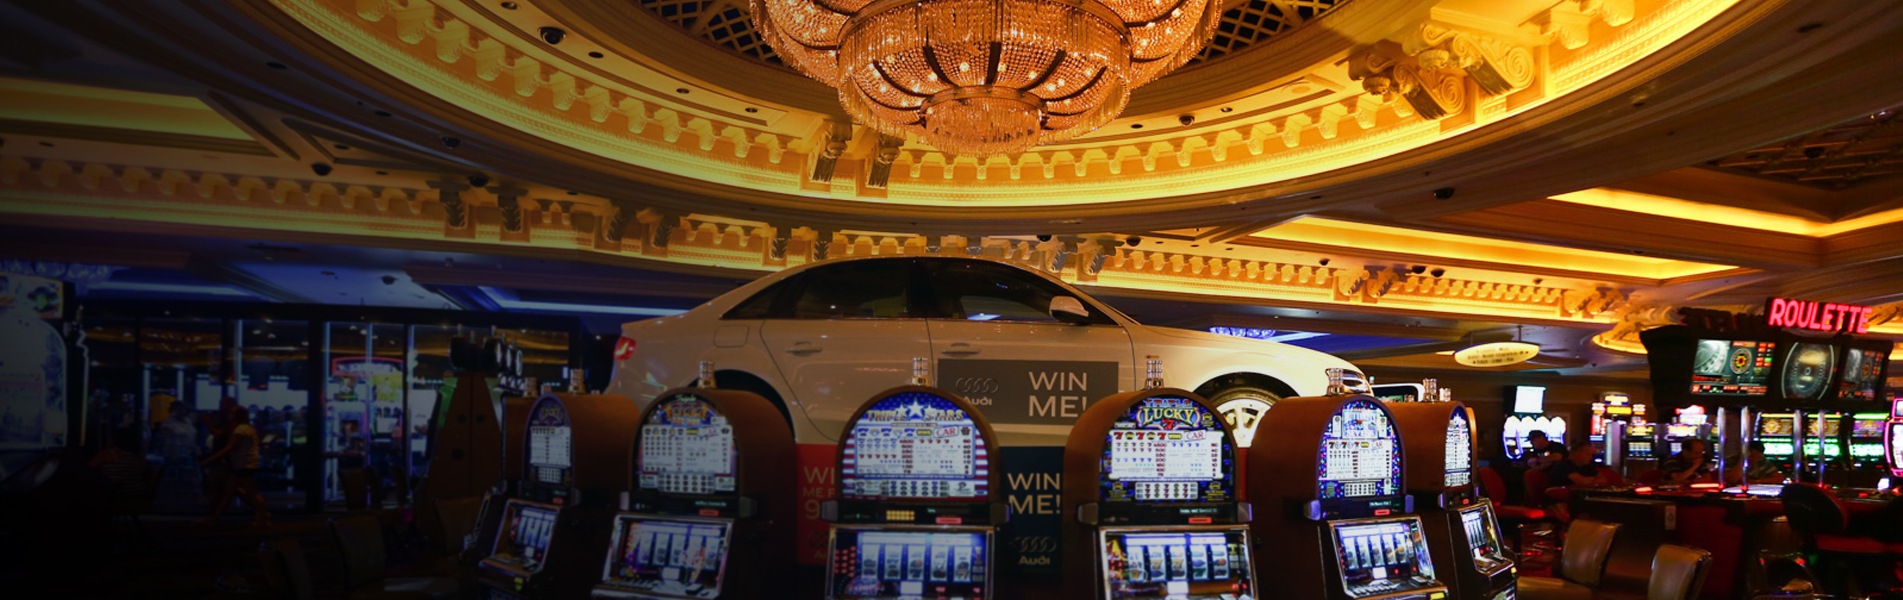 Monte Carlo Casino Las Vegas 3